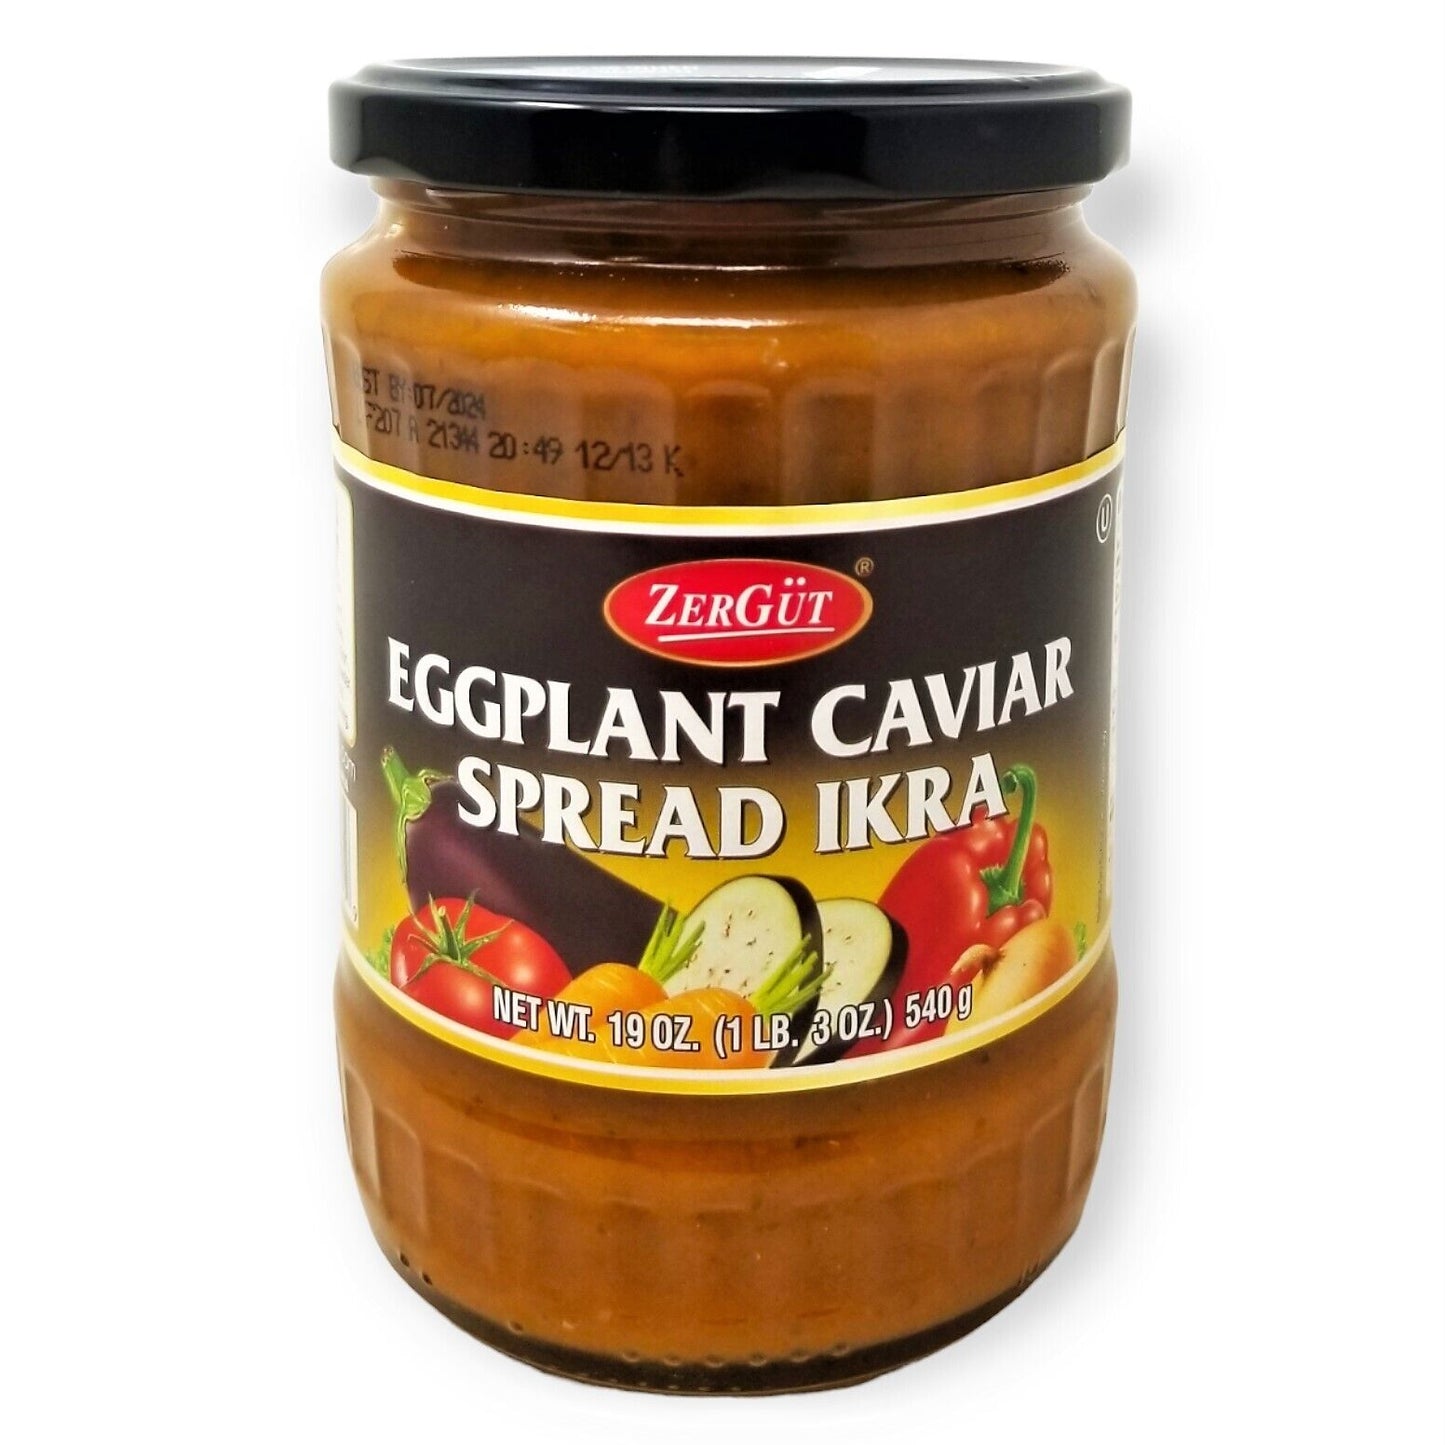 Zergut Eggplant Caviar Spread Ikra, 540g